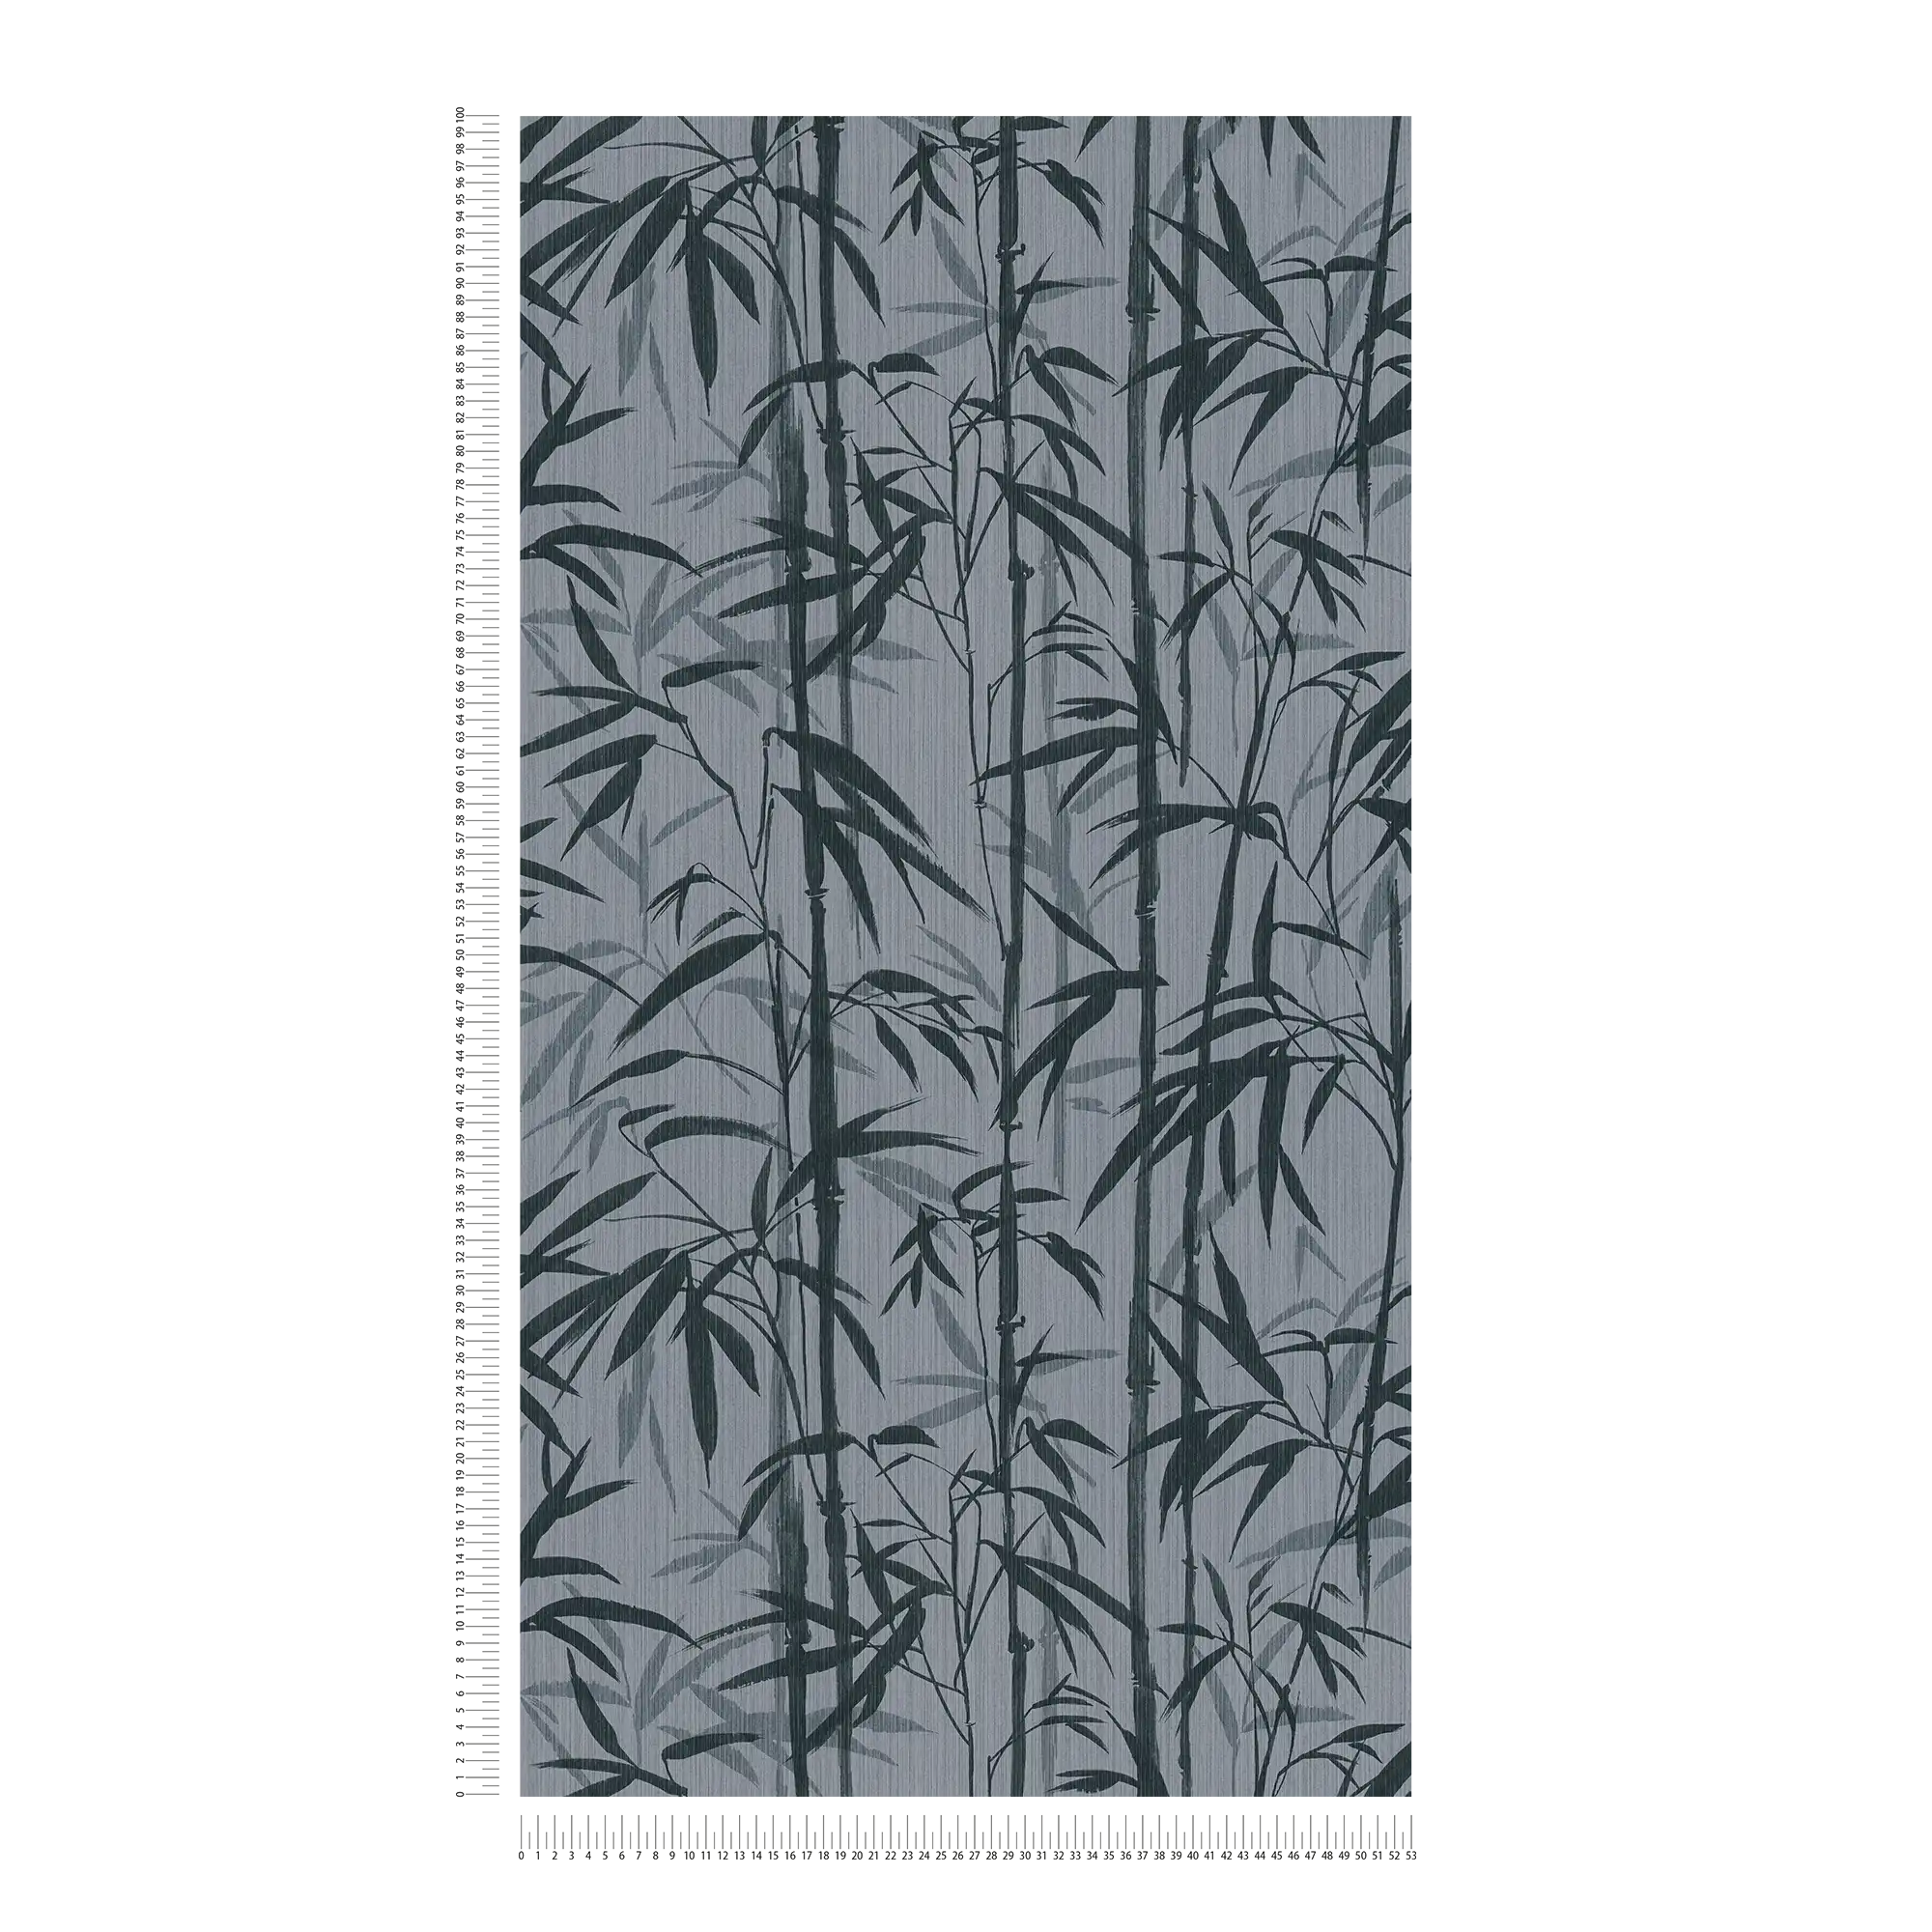             MICHALSKY papier peint intissé motif bambou naturel - gris, noir
        